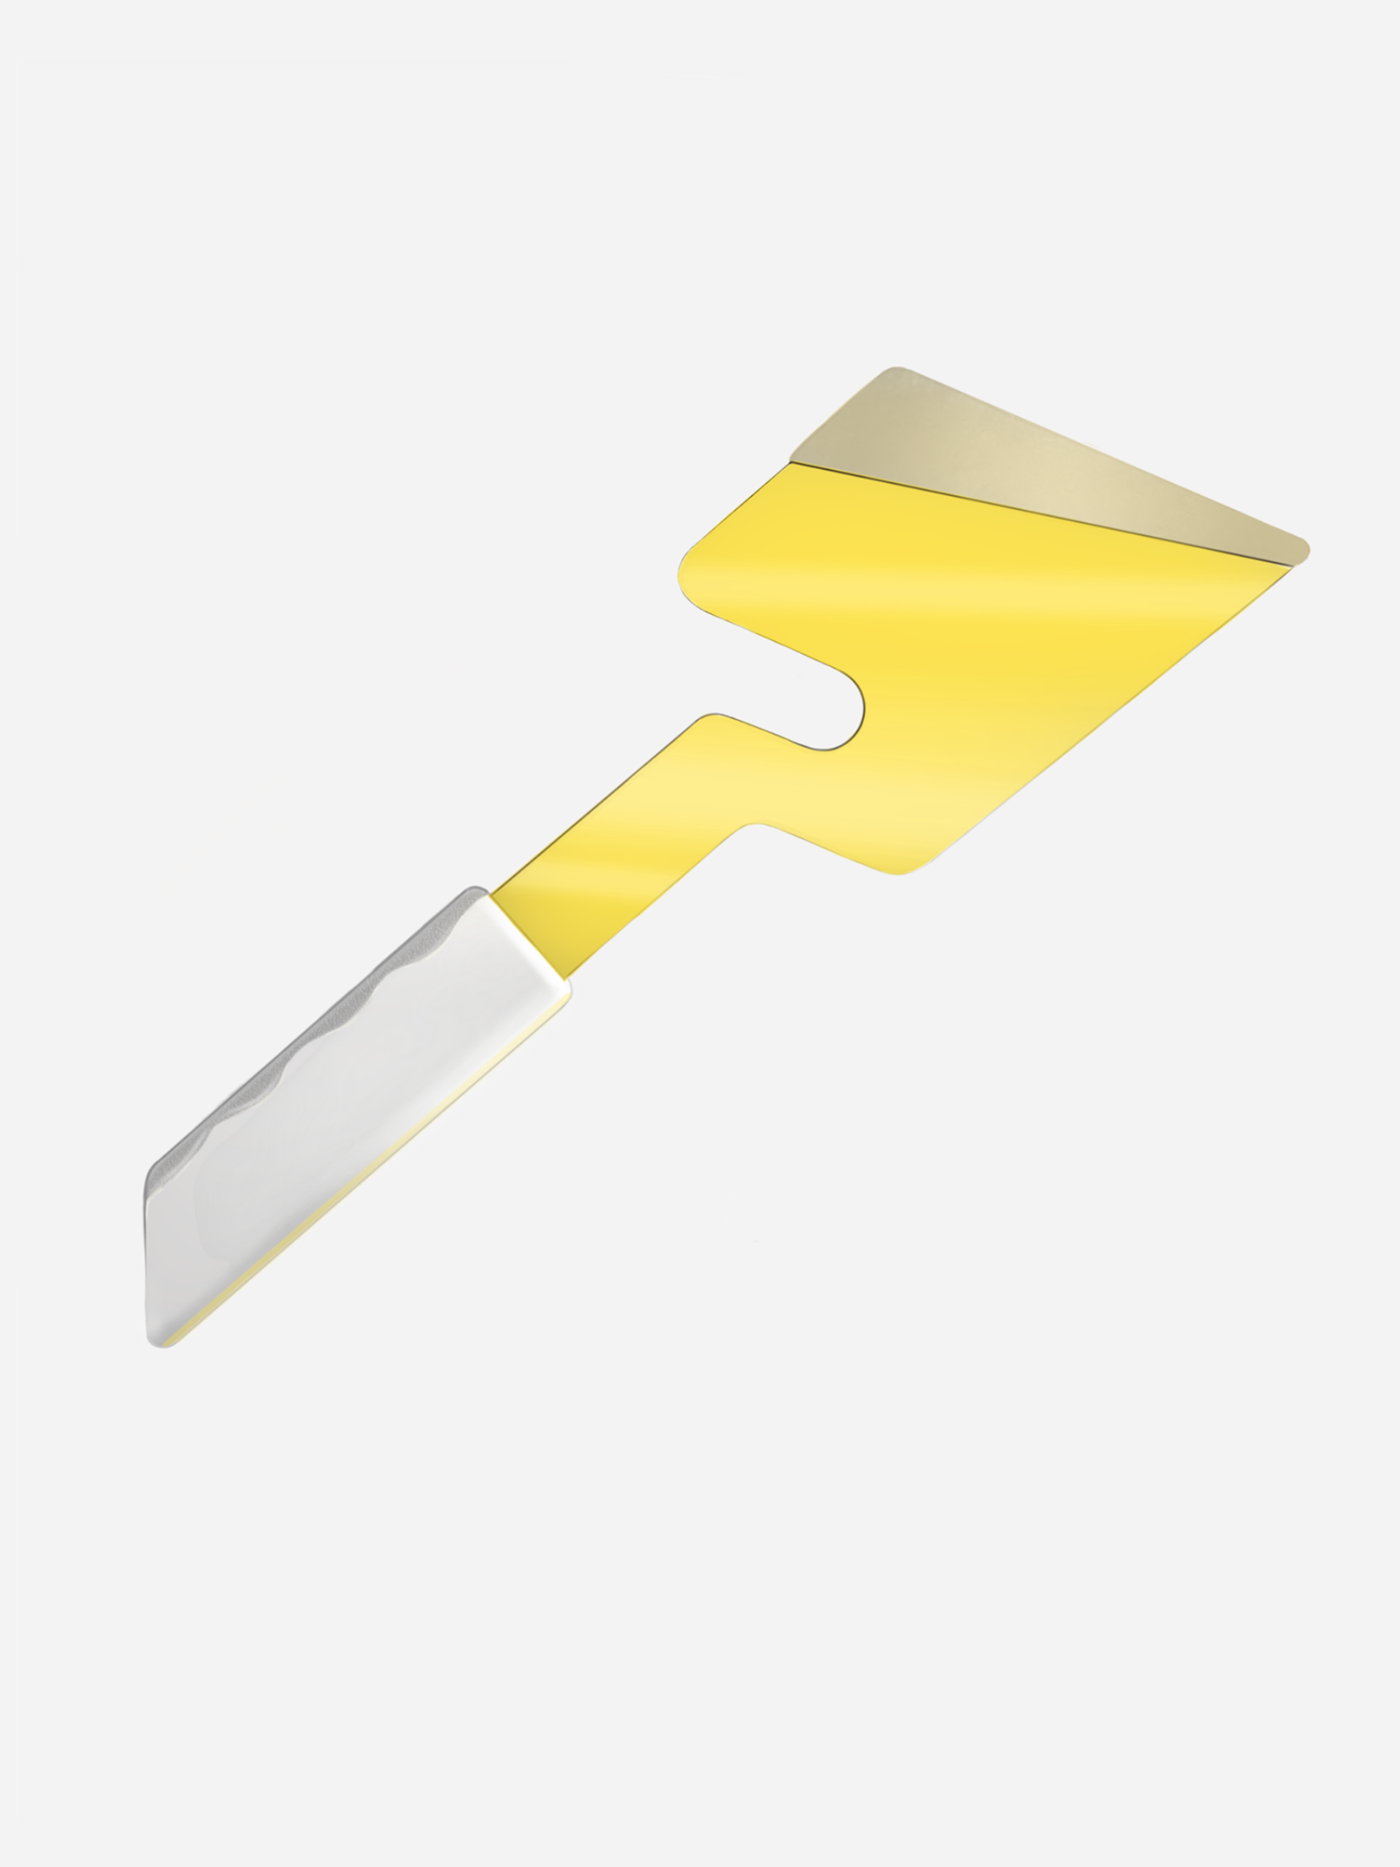 redesign Kitchen Tool spatula ari enkh product design  industrial design  cooking product development utensil kitchen